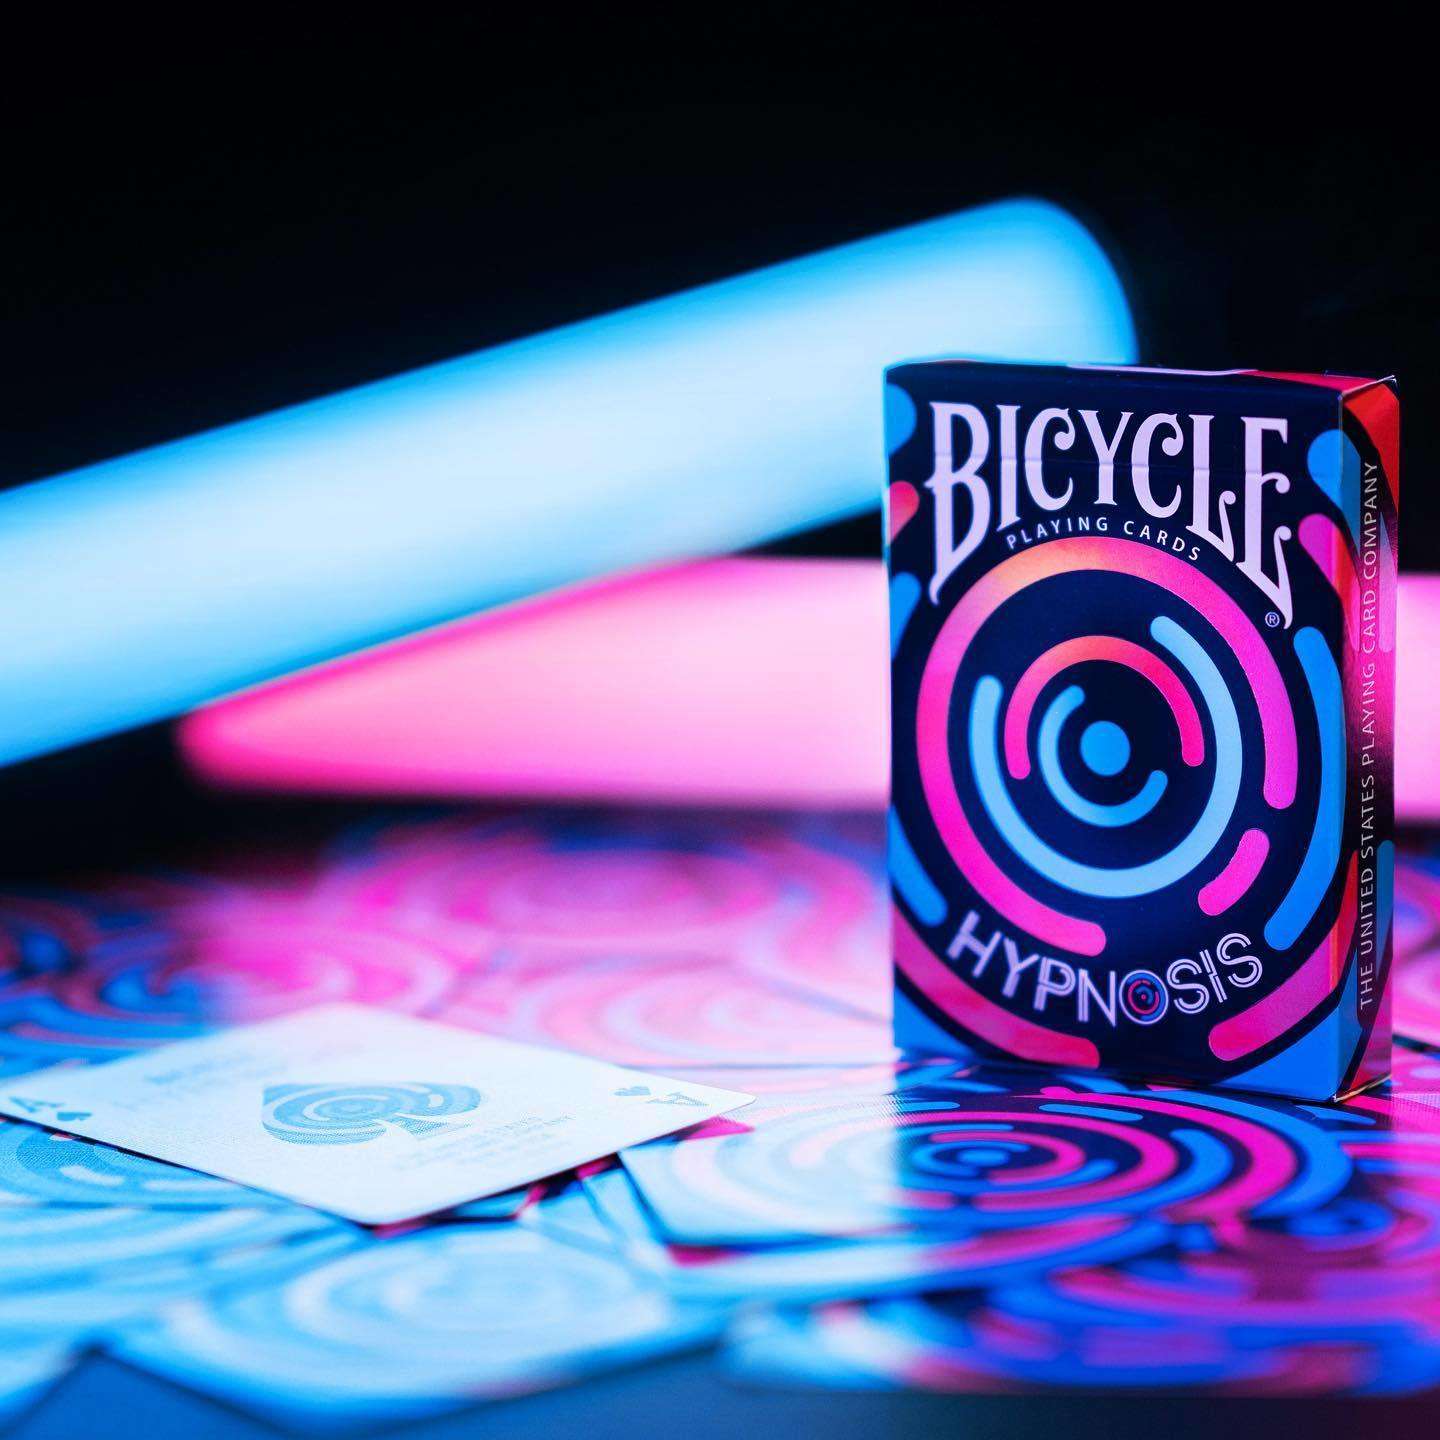 PlayingCardDecks.com-Hypnosis v2 Bicycle Playing Cards